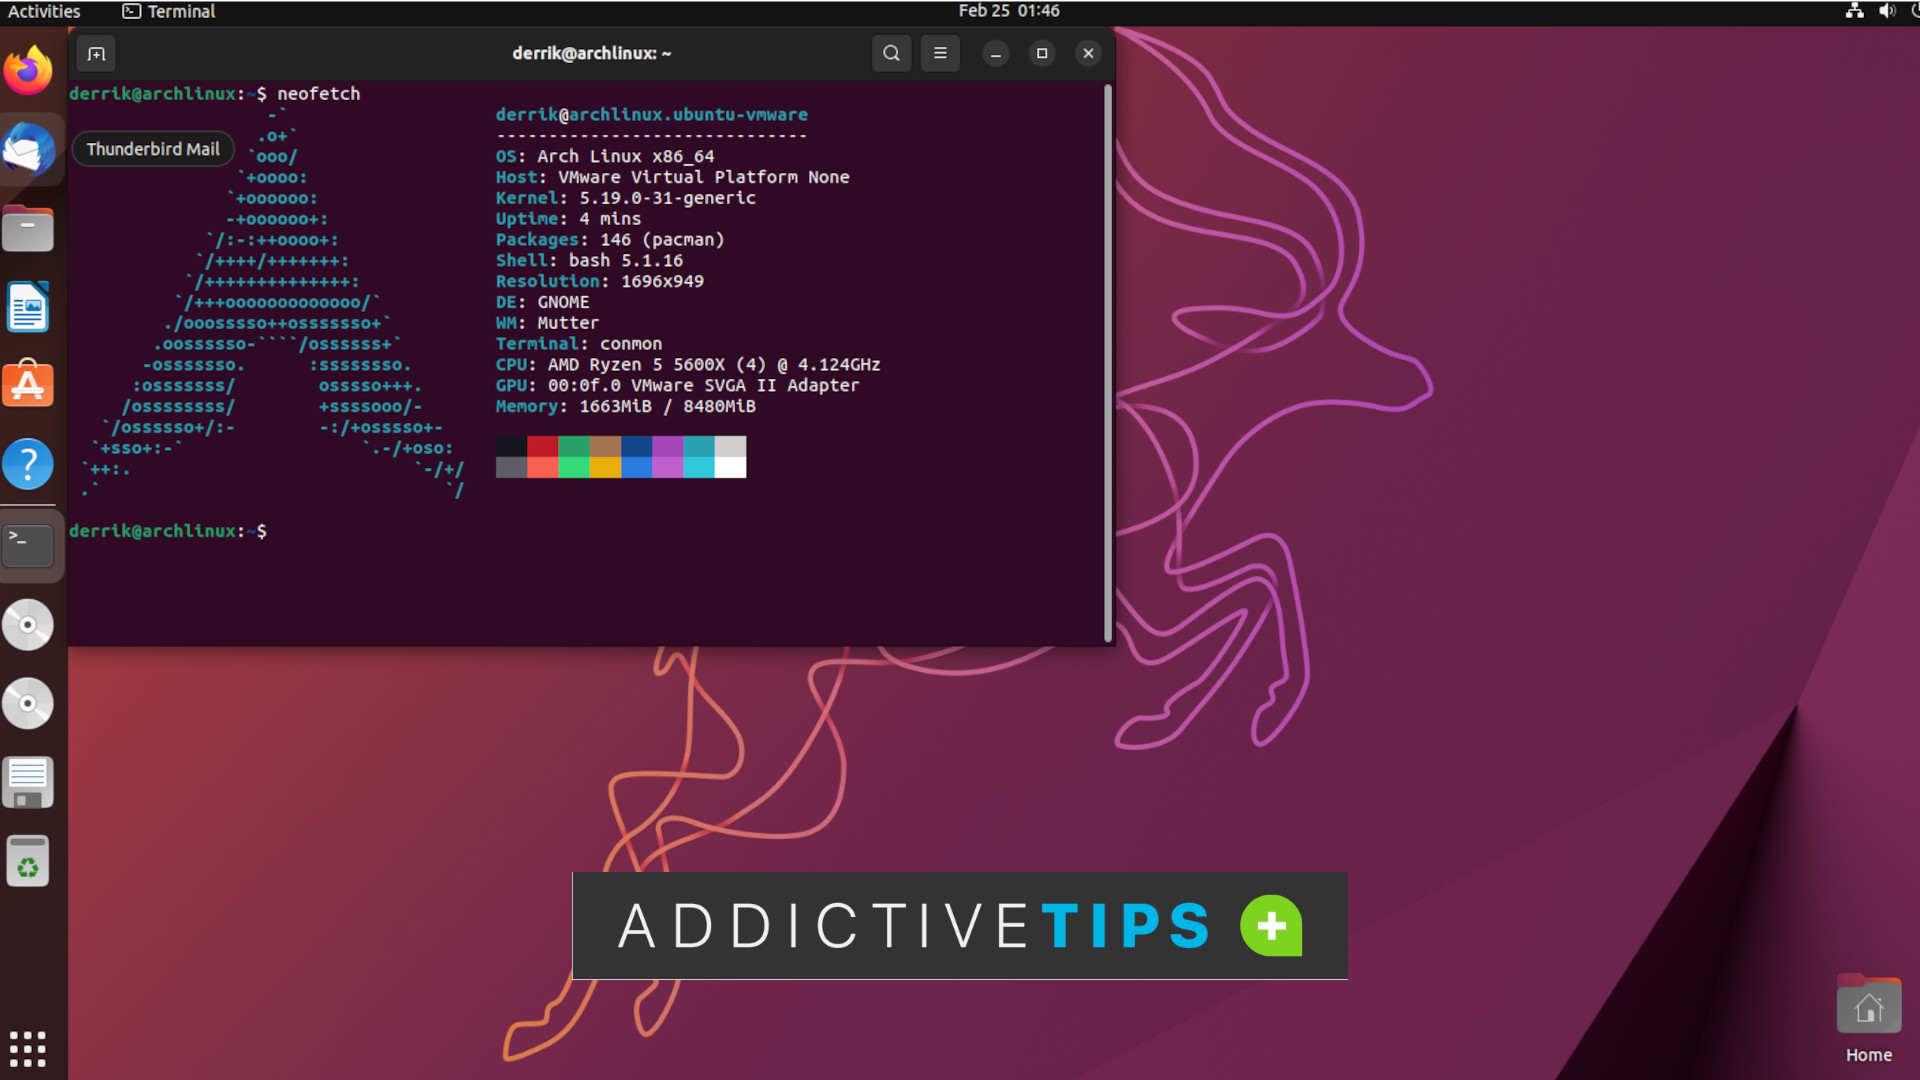 How To Run The Arch Linux Aur On Ubuntu Addictive Tips Guide